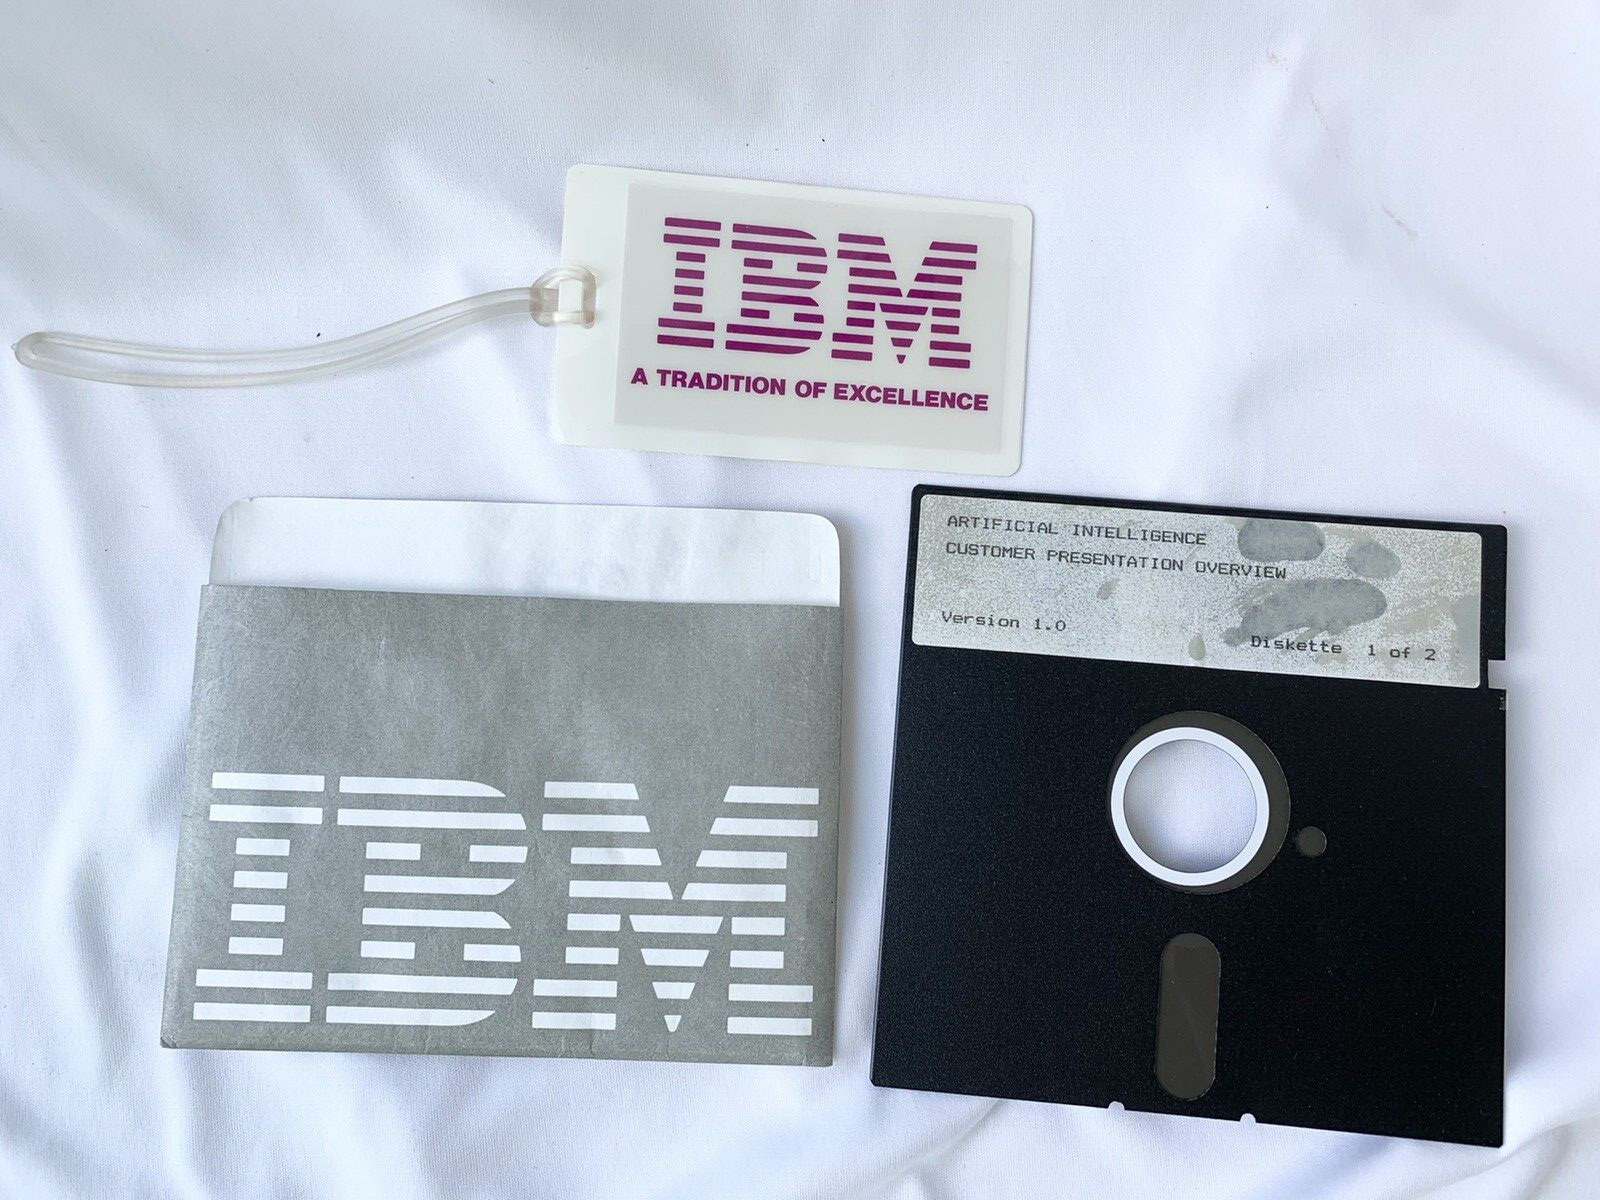 Vintage 1980s IBM AI ARTIFICIAL INTELLIGENCE Floppy Disk Presentation Name badge